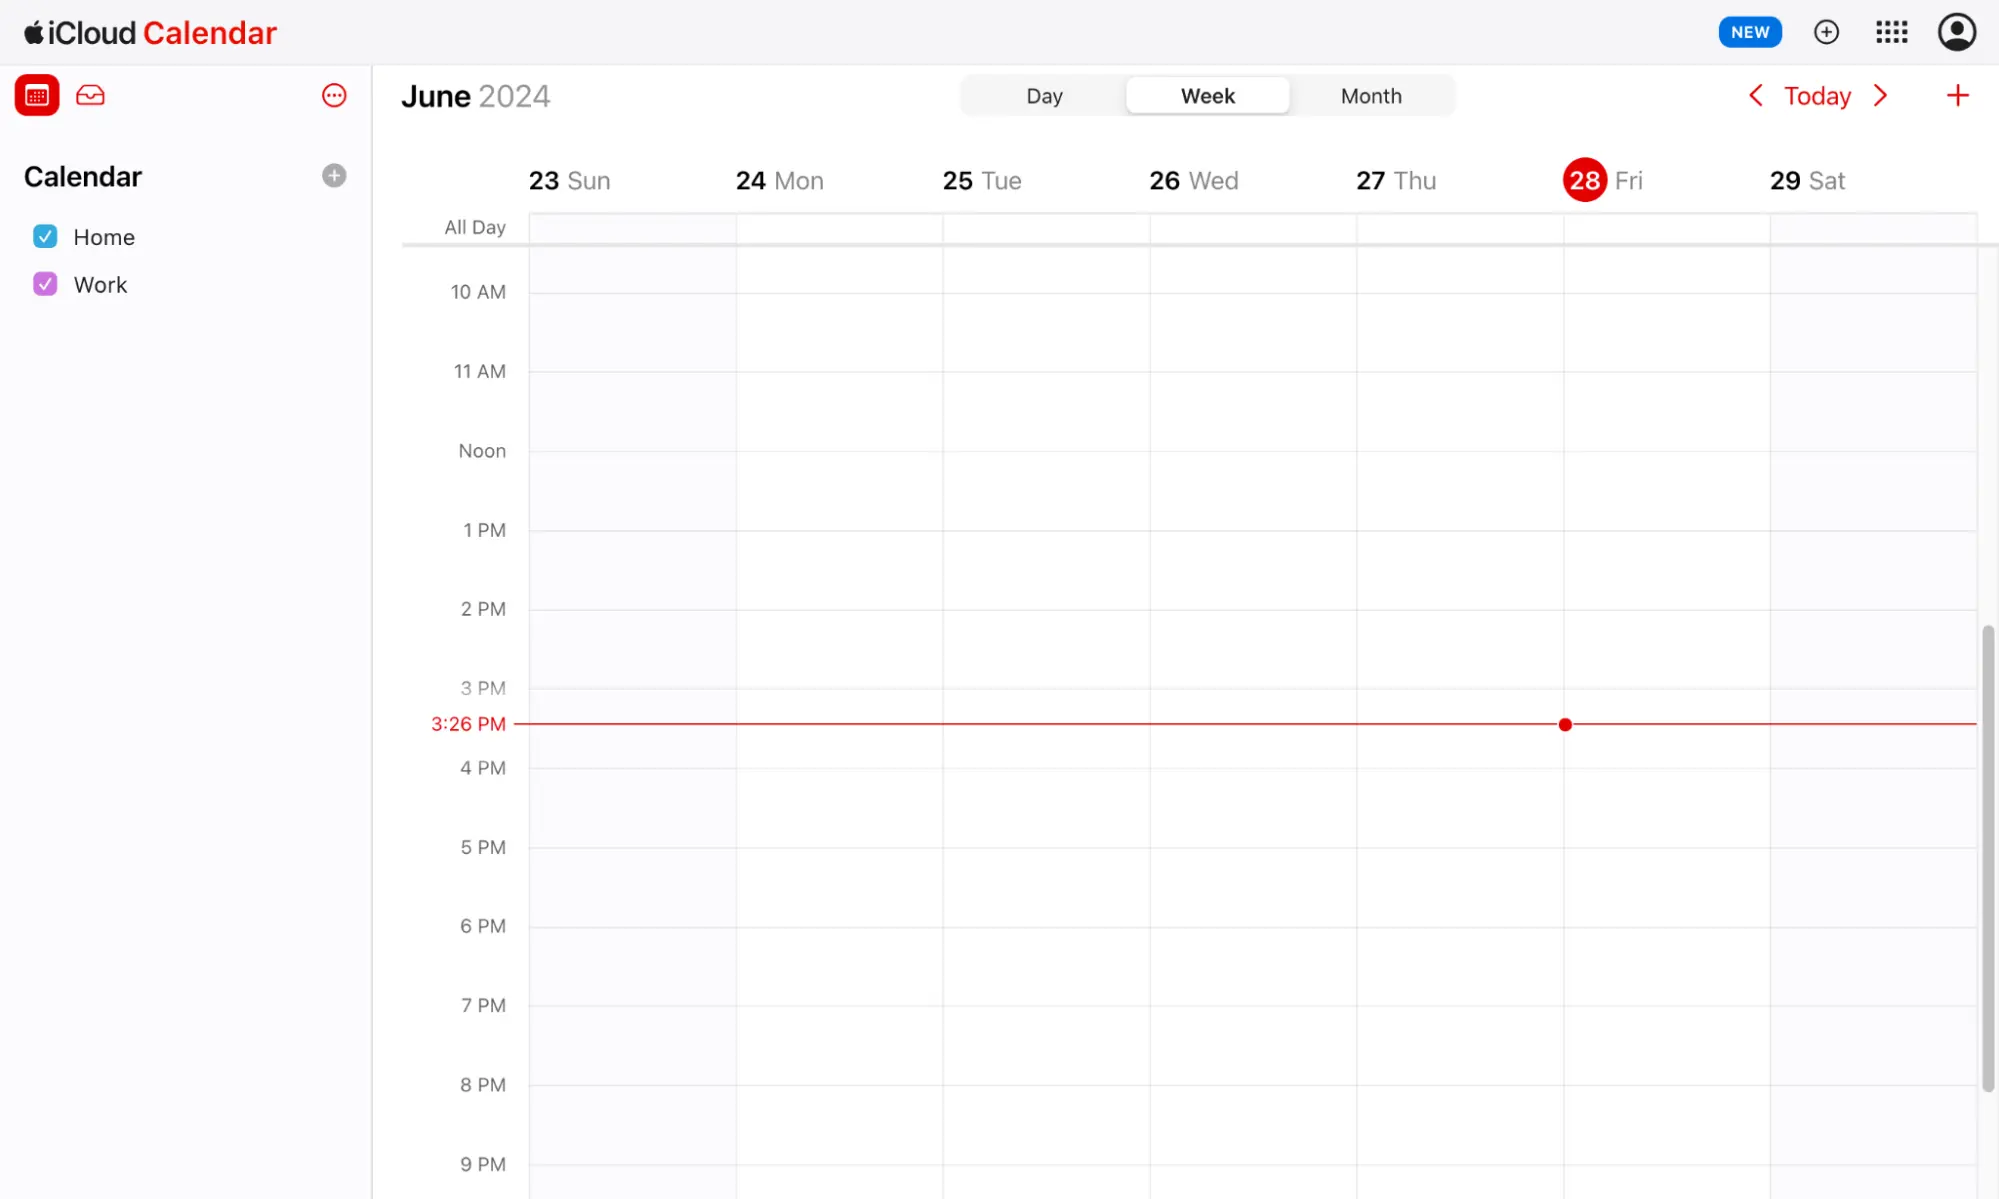 iCloud calendar interface